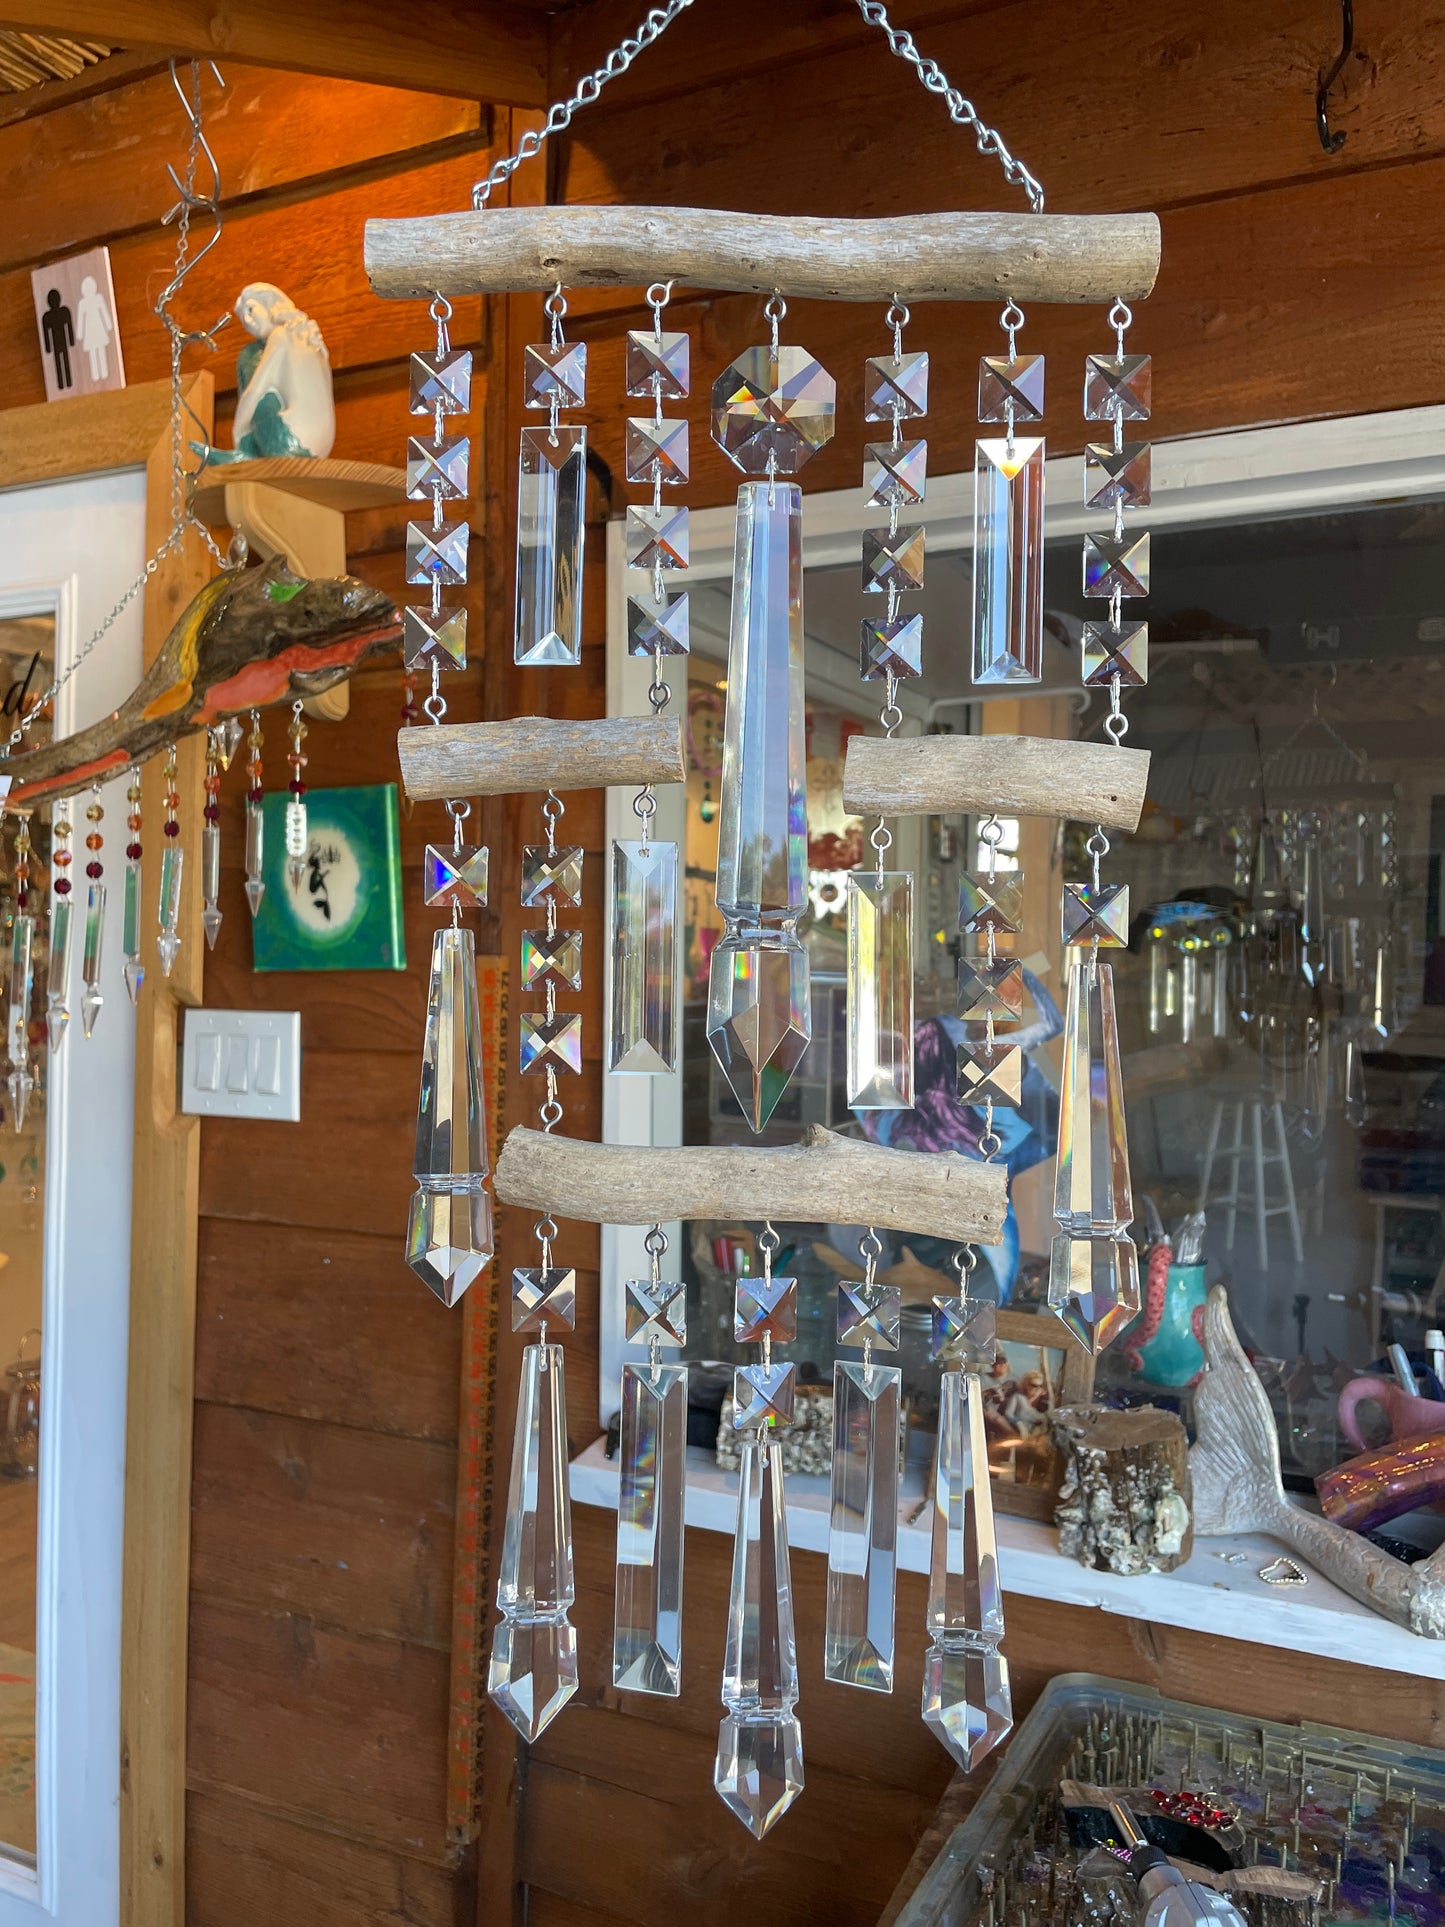 Suncatcher windchime driftwood crystal chandelier prisms hand made unique gift